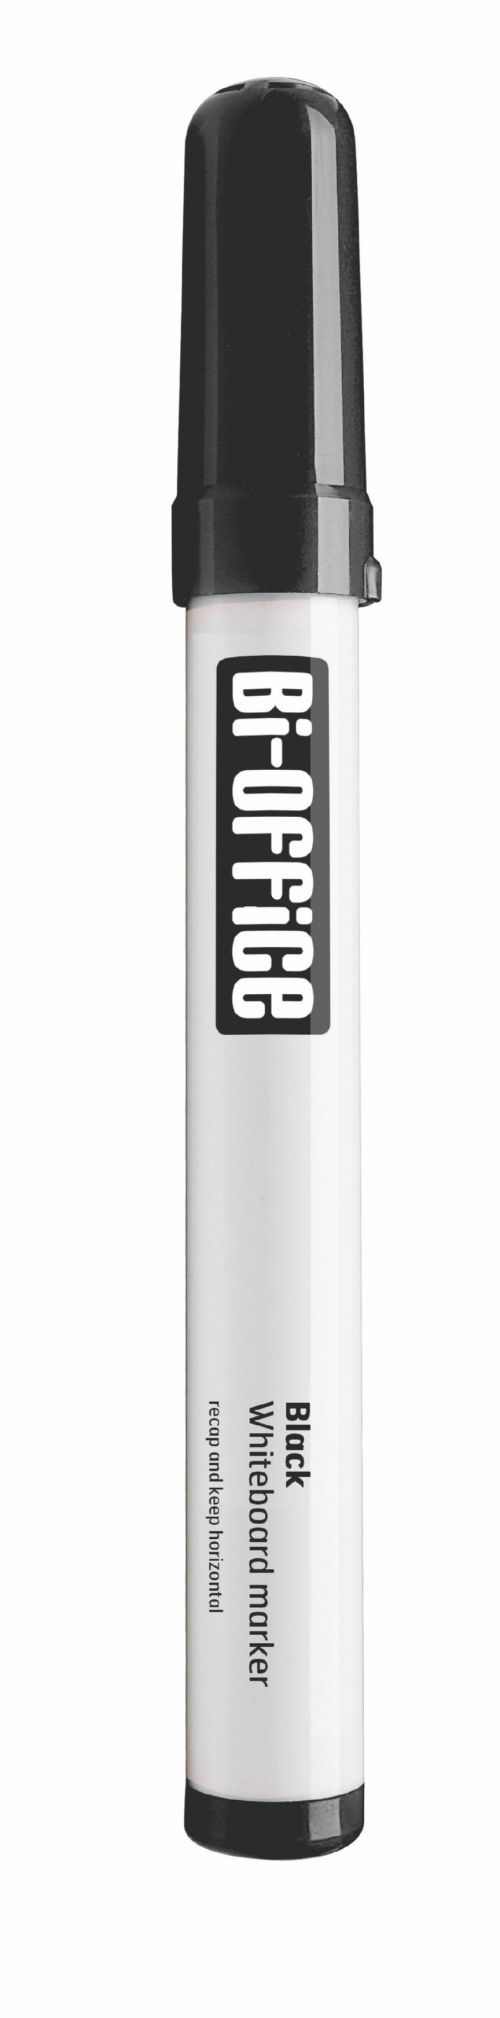 Drywipe Markers Bi-Office Dryerase Whiteboard Marker Bullet Tip Black (Pack 10)